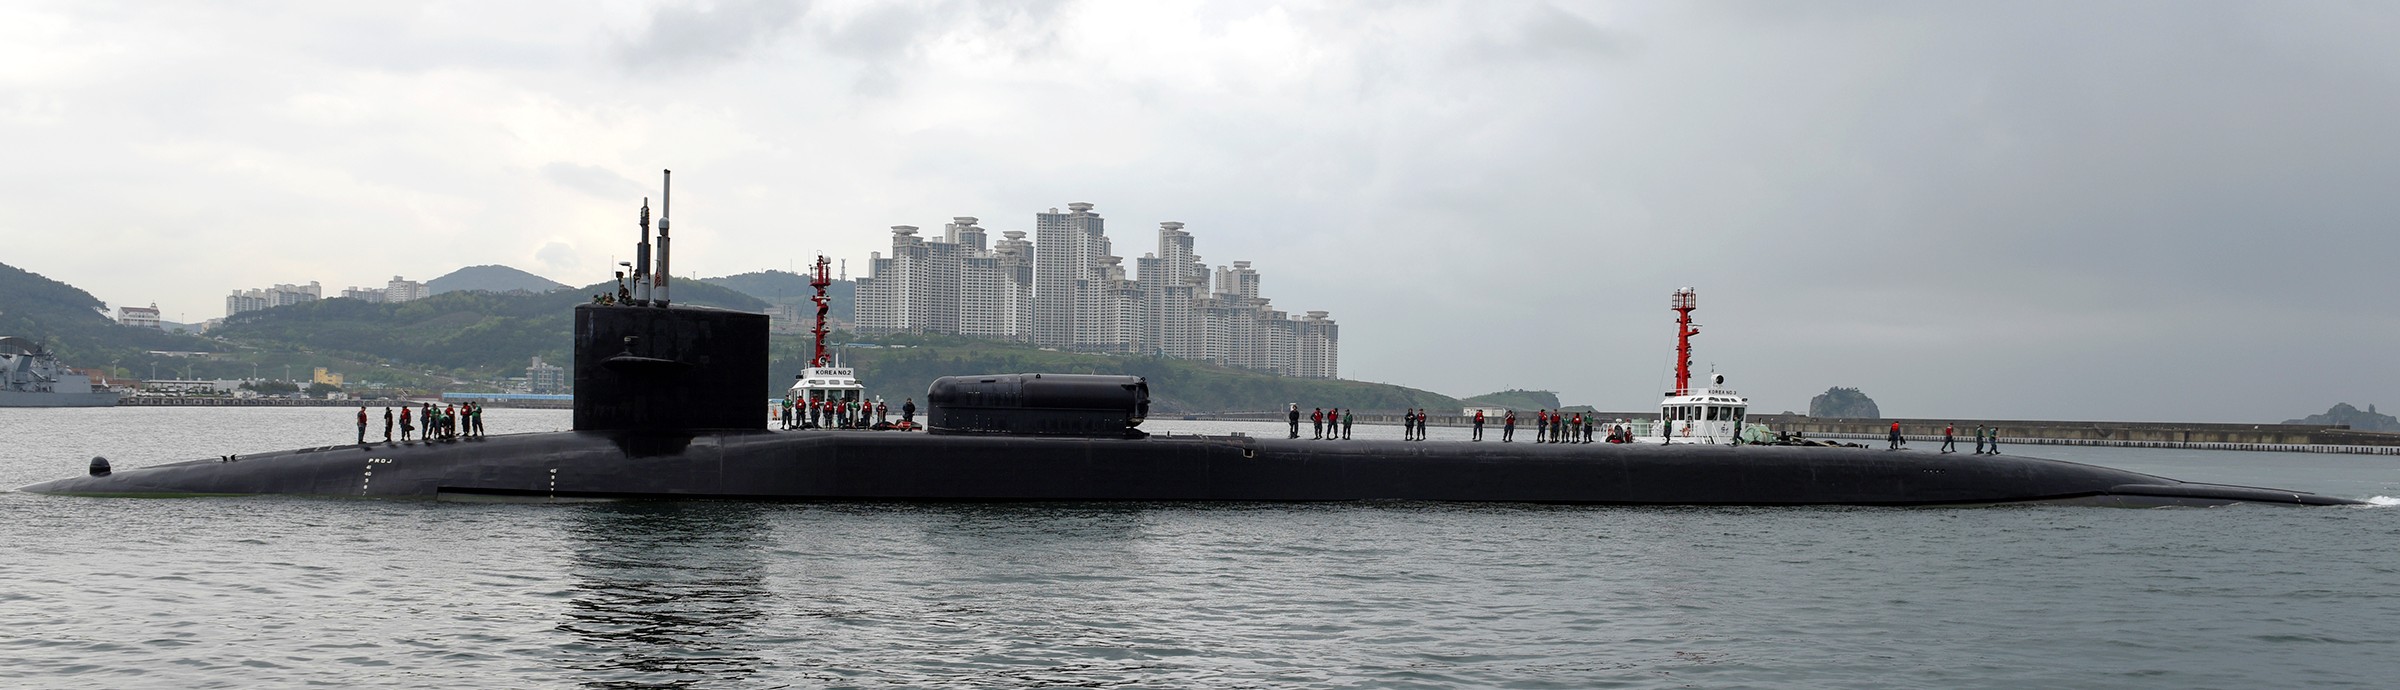 ssgn-727 uss michigan guided missile submarine 2017 03 busan korea